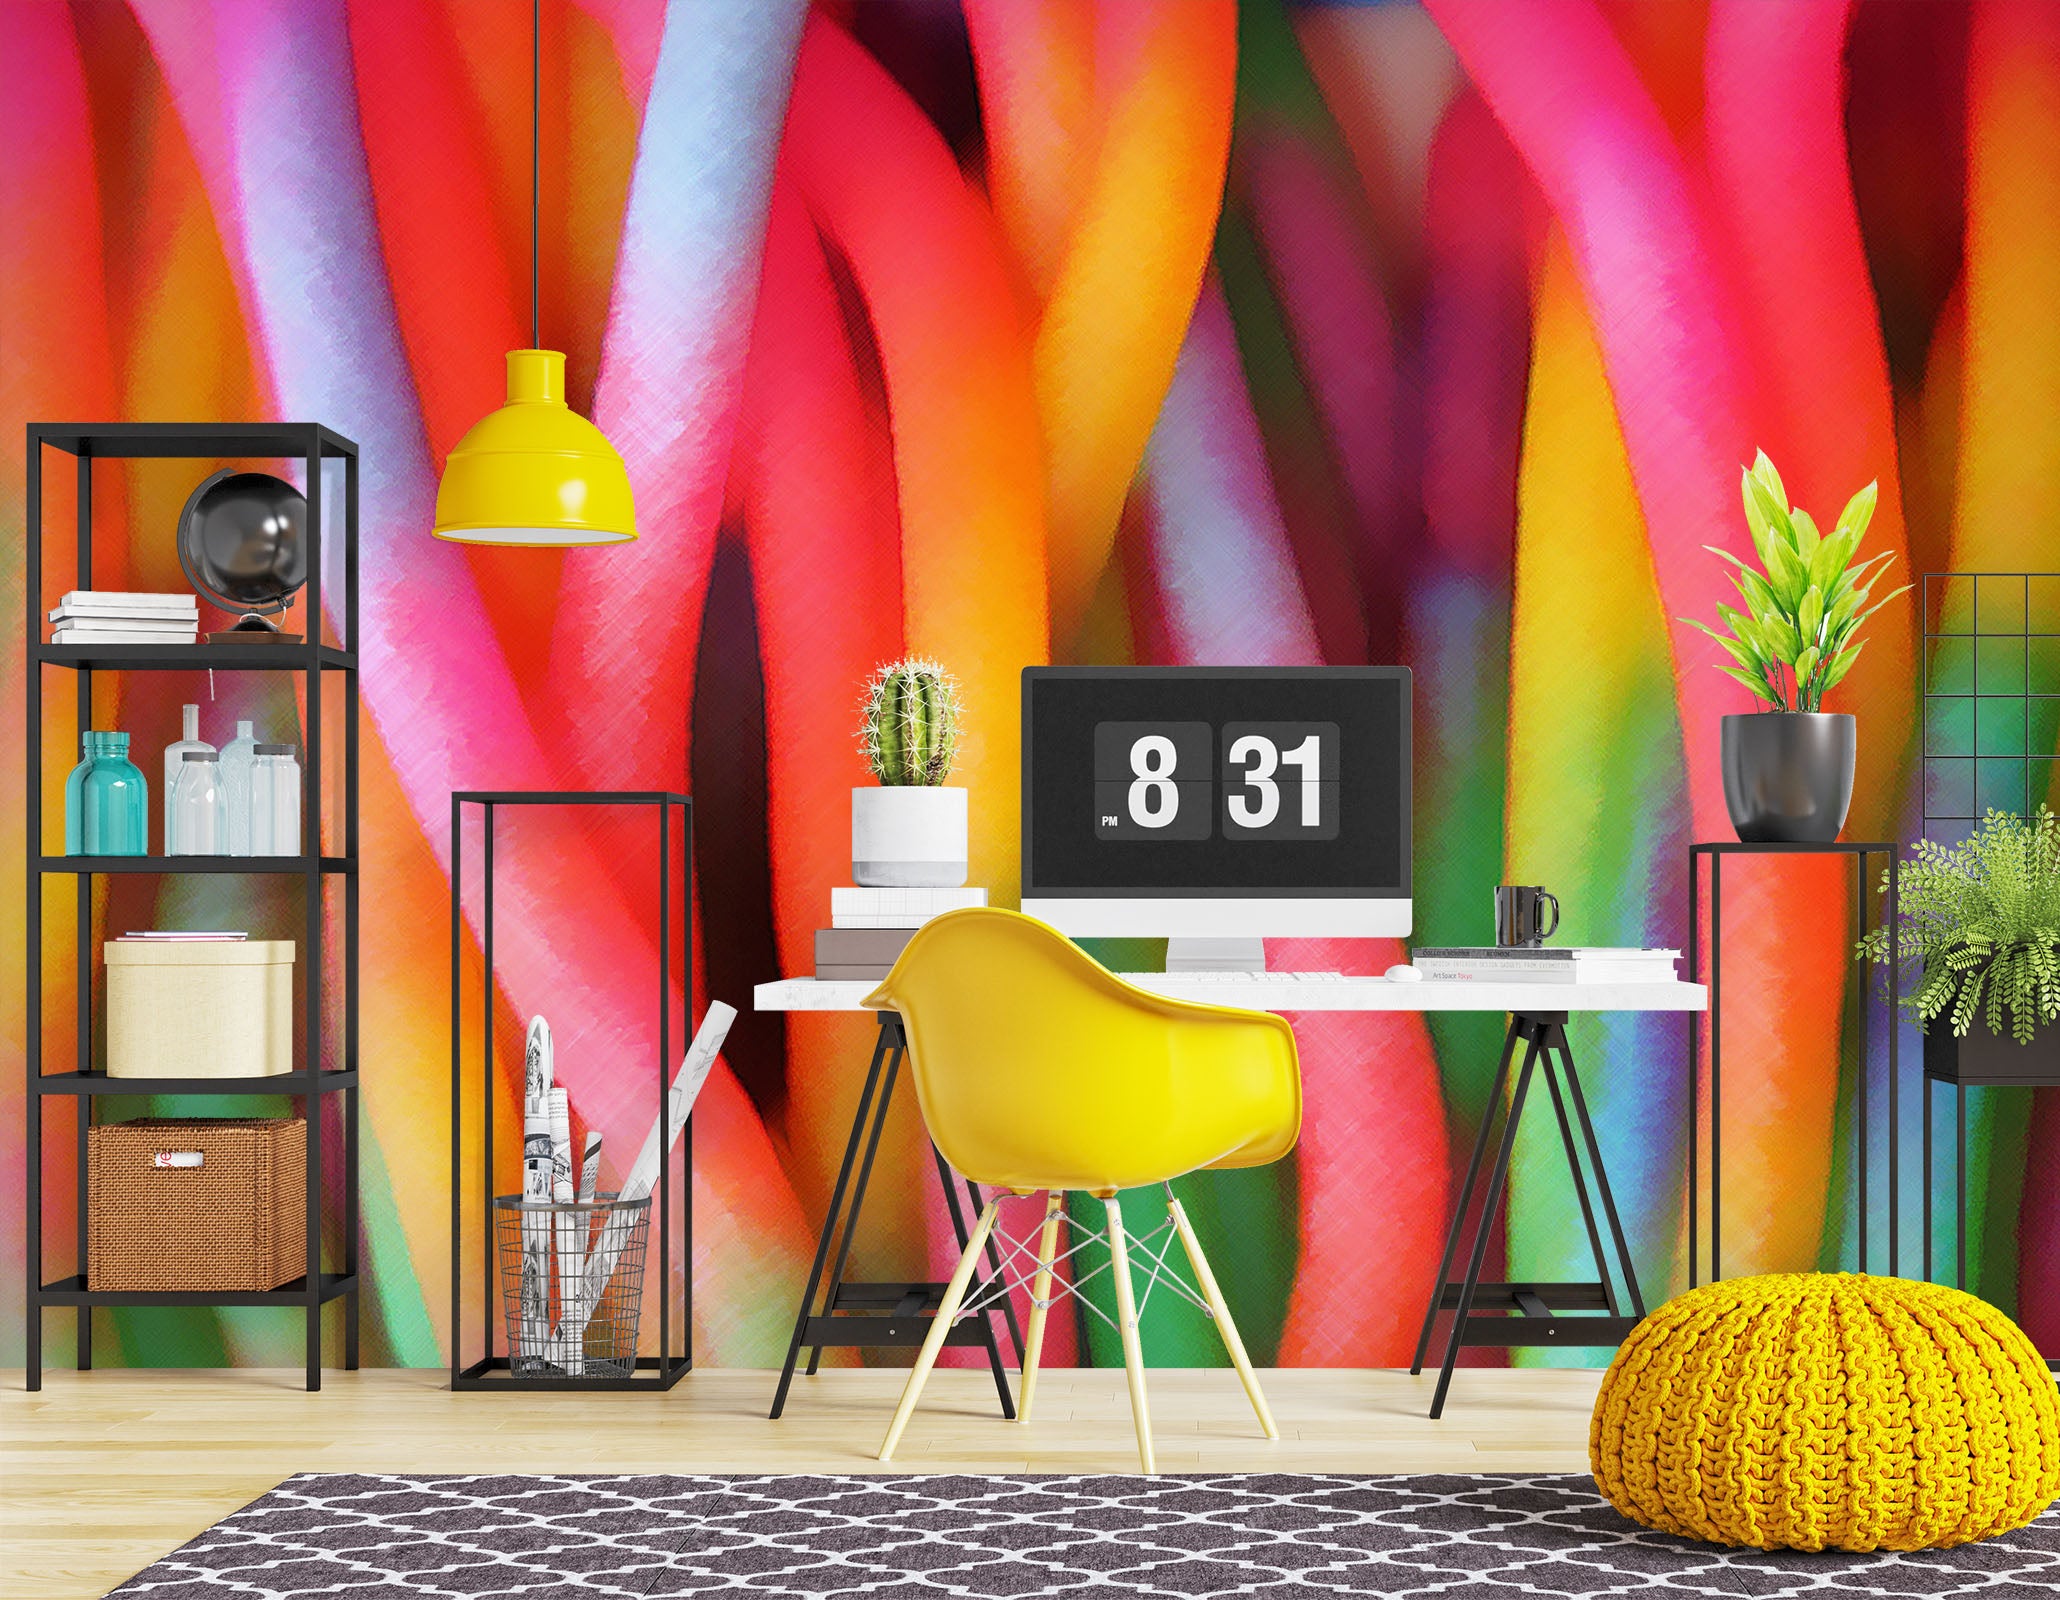 3D Color Bars 70108 Shandra Smith Wall Mural Wall Murals